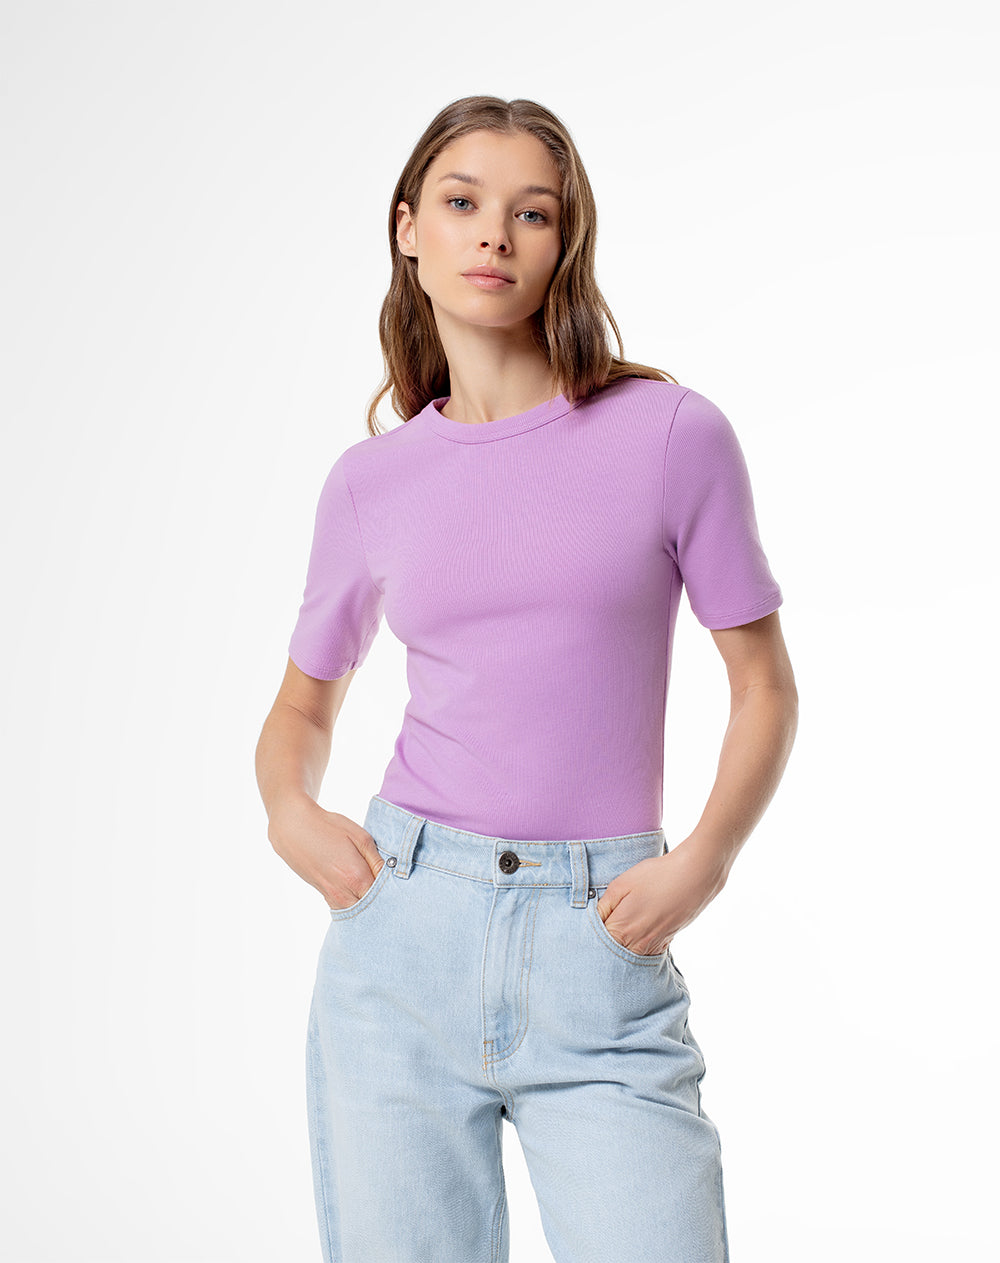 Camiseta fitted fit manga corta violeta